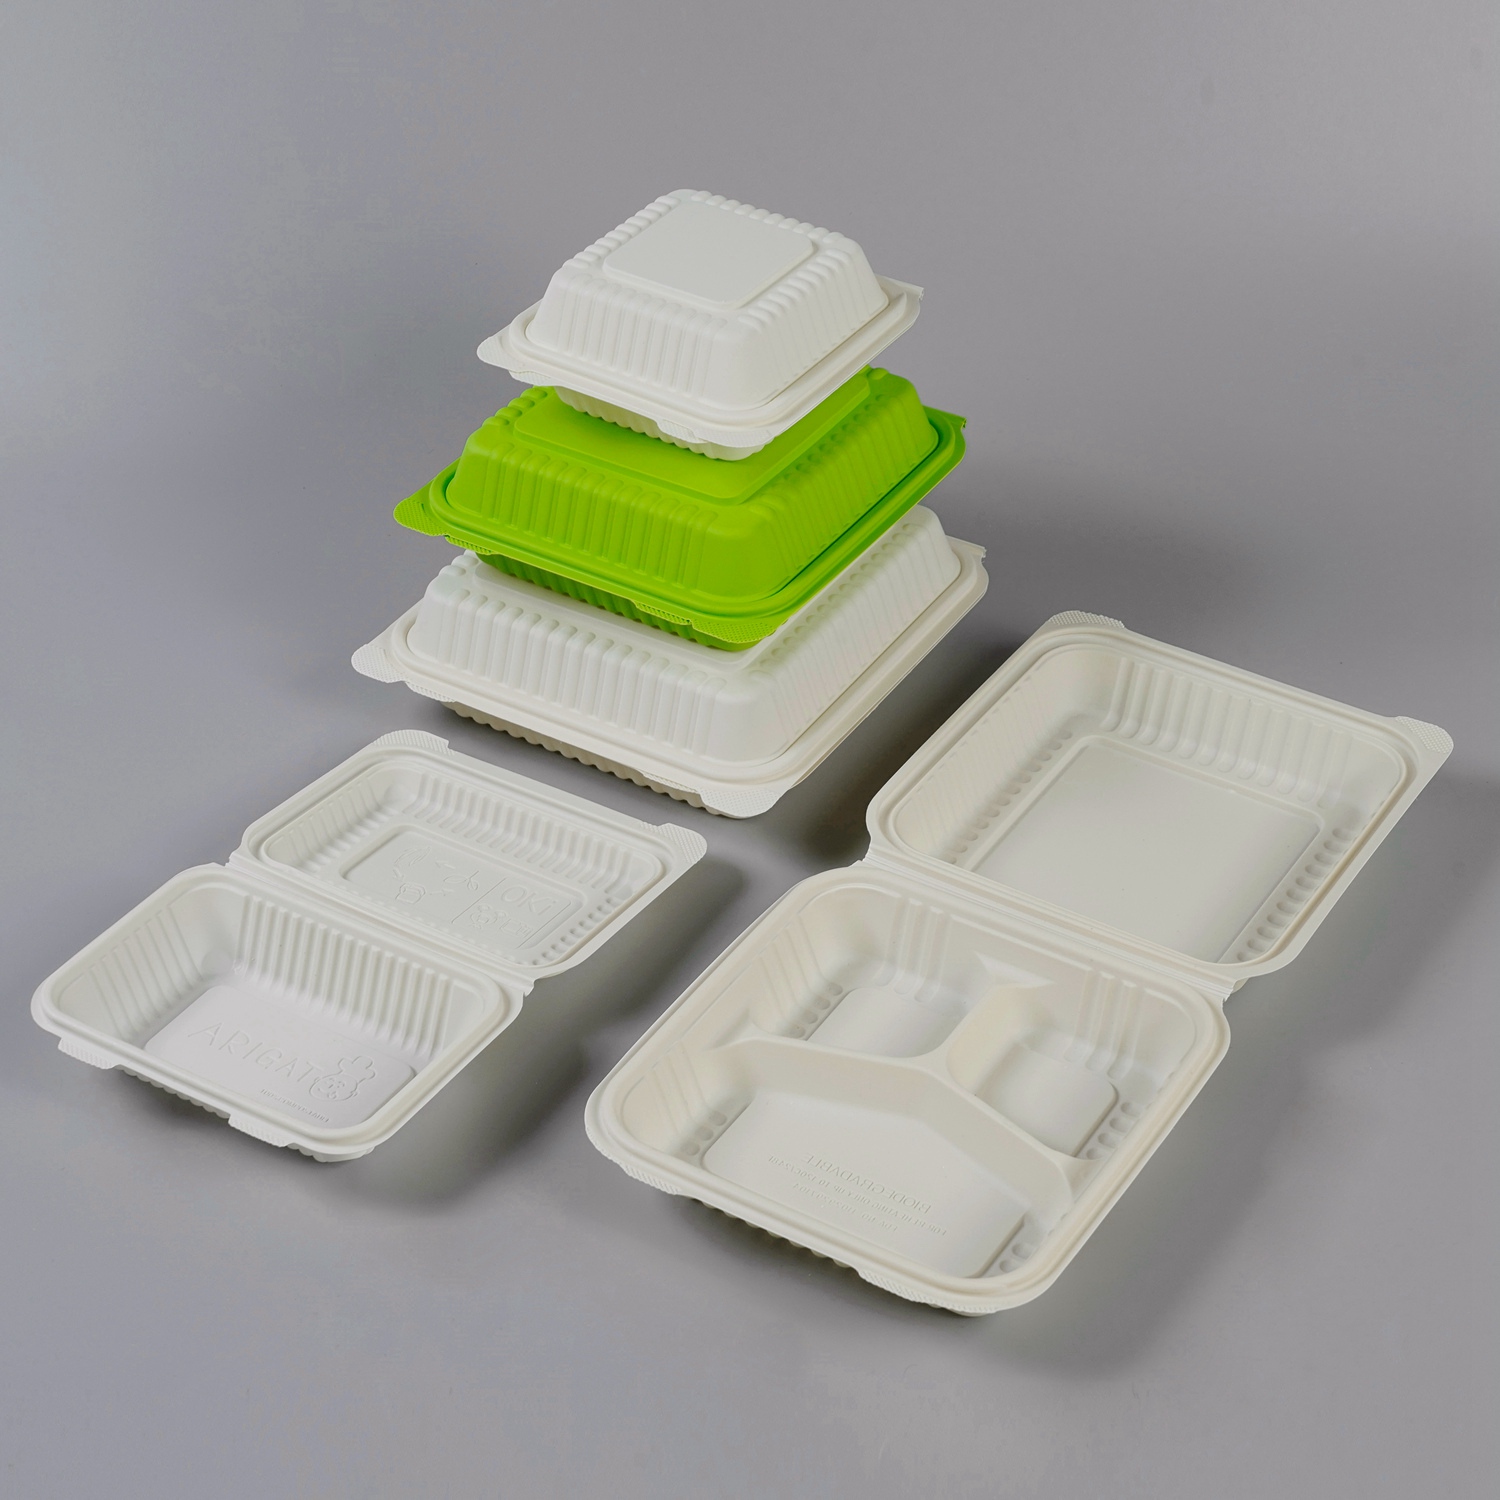 Caixa de comida rápida compostable ecolóxica de 9 pulgadas 3coms de maicena para levar